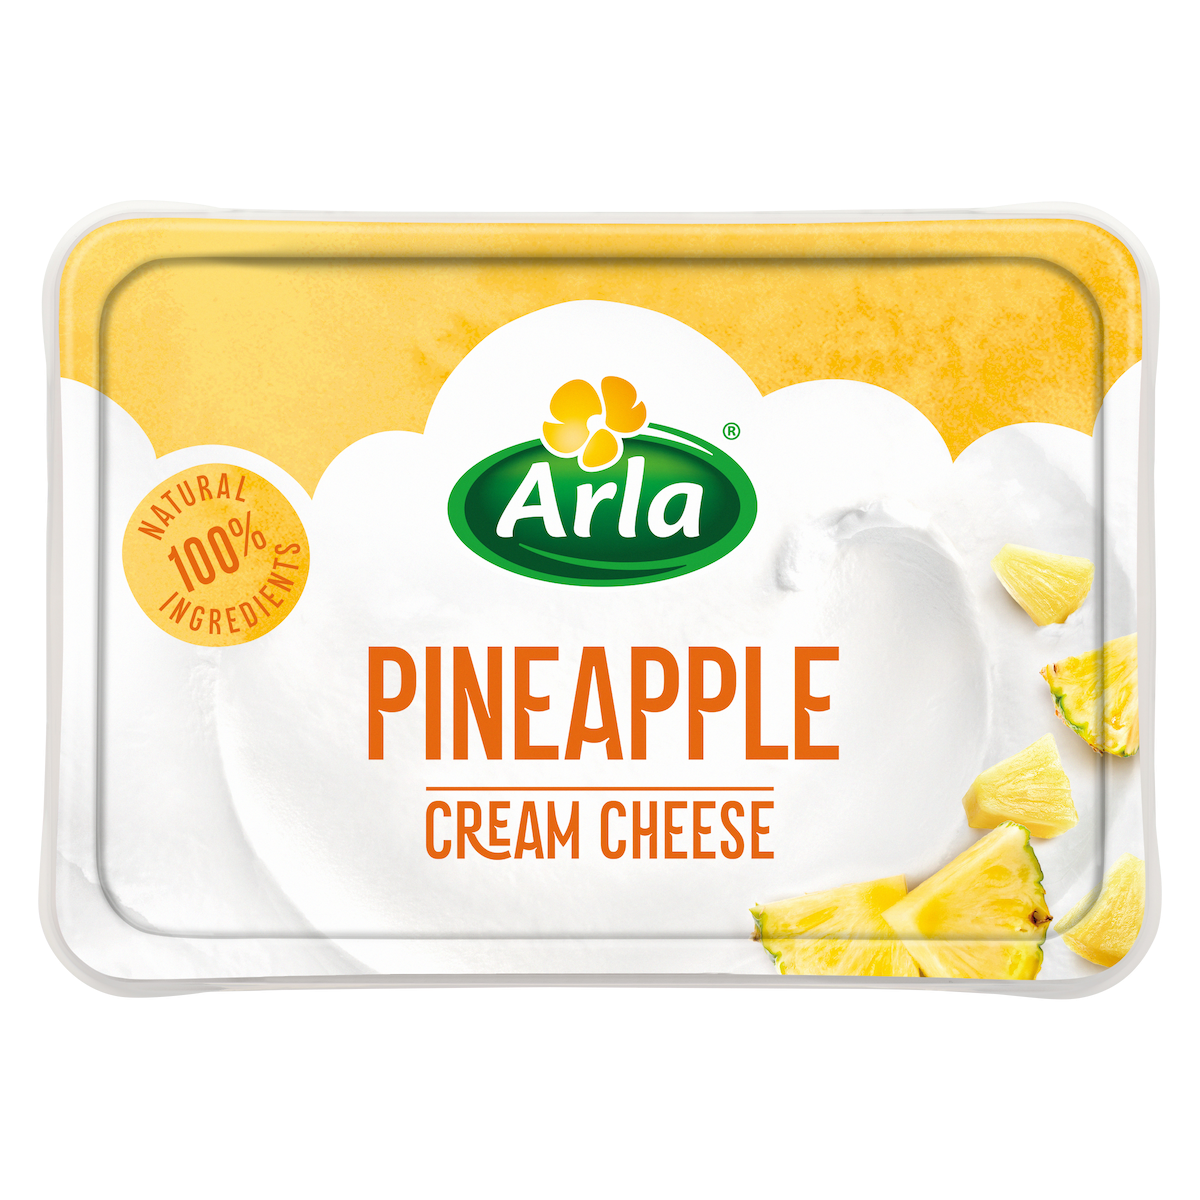 Arla Pineapple Cream Cheese